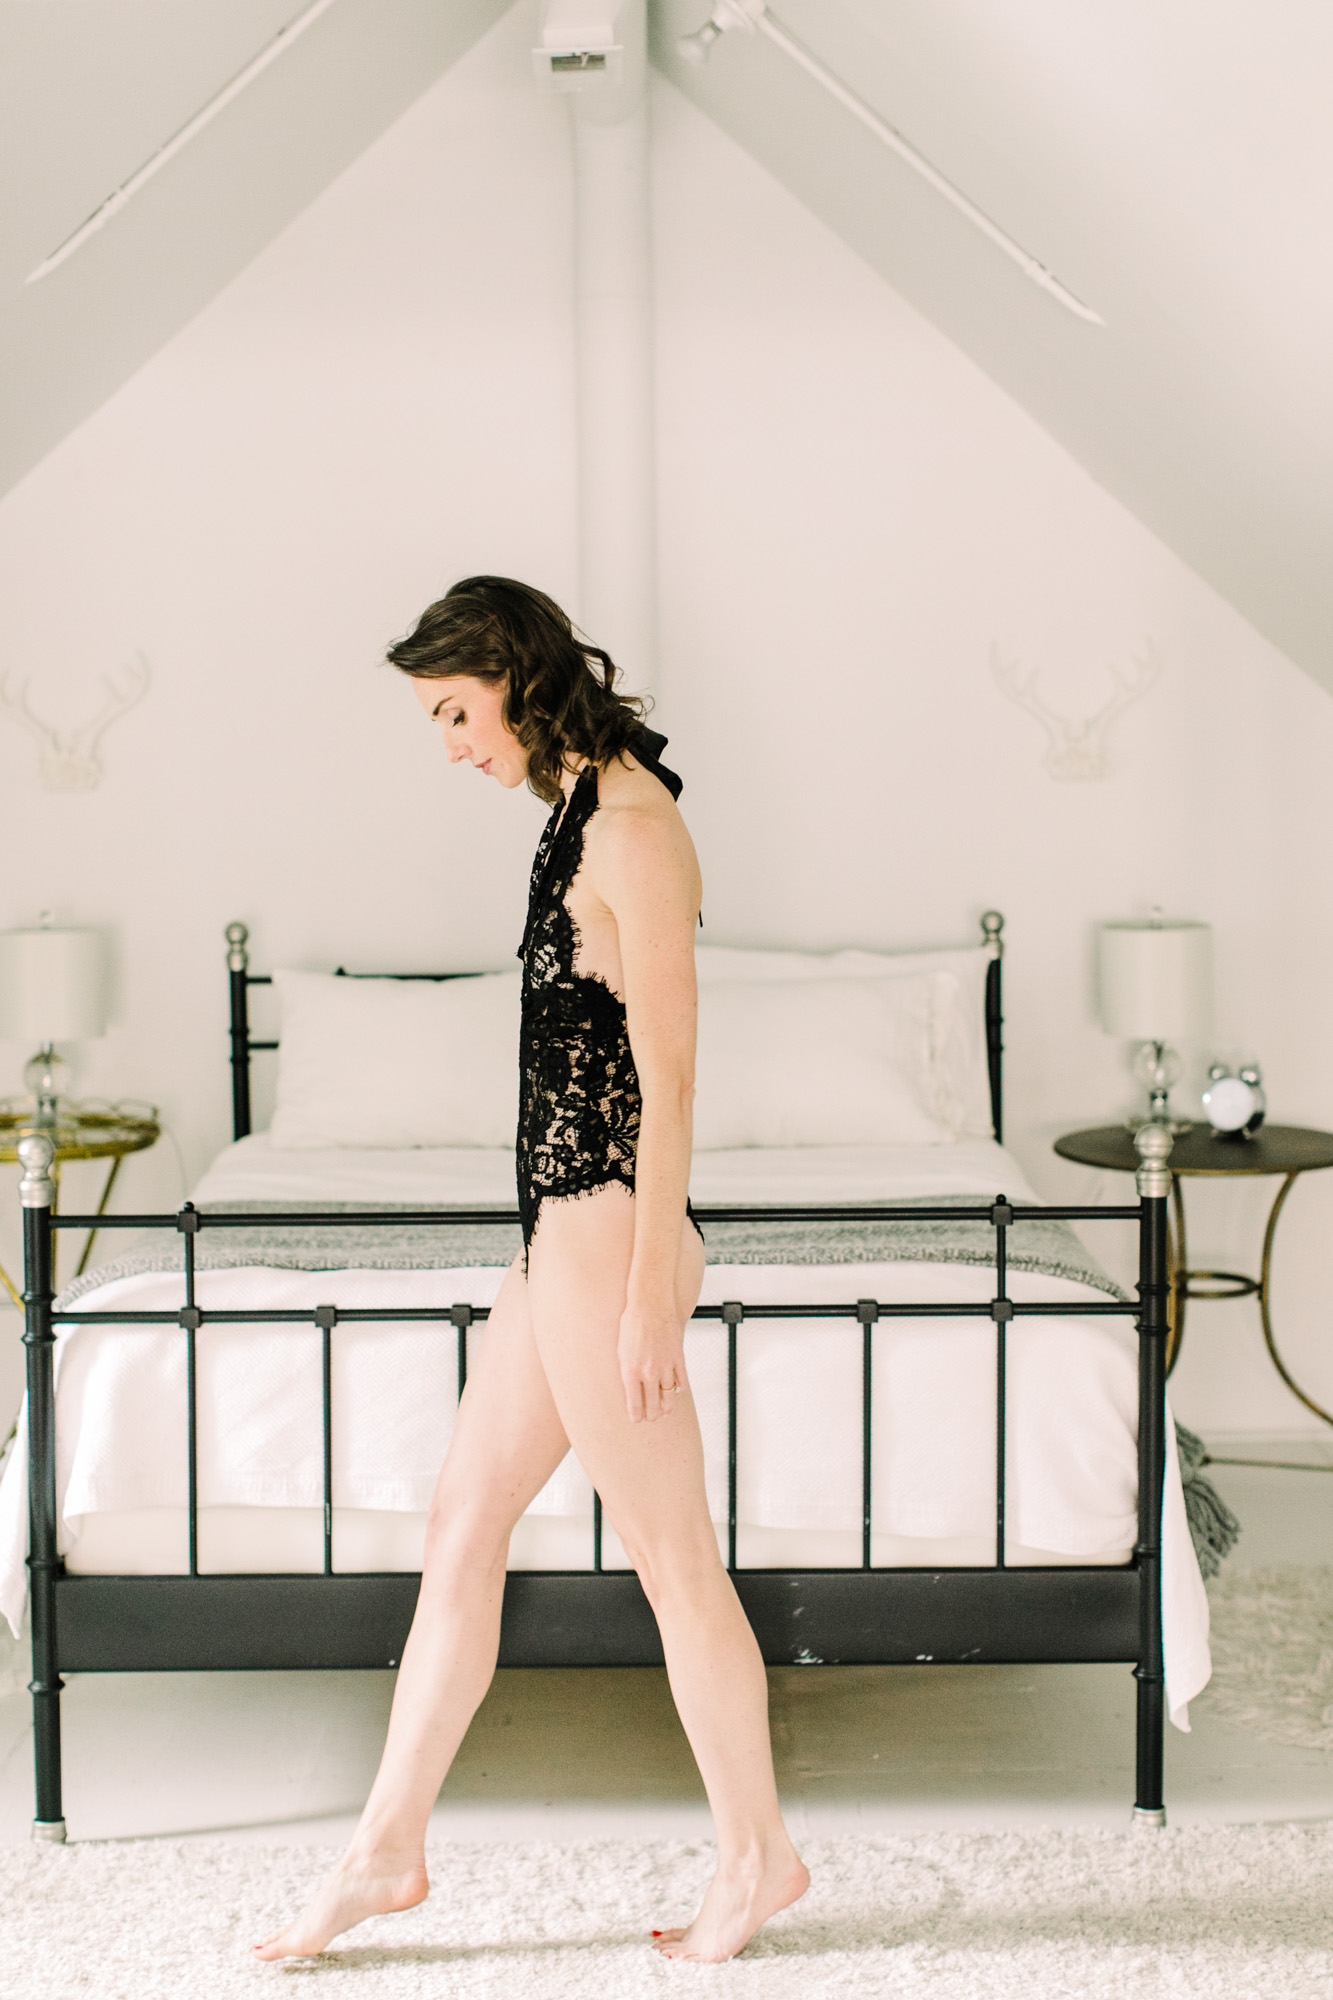 A woman walks across the bedroom for her boudoir shoot.